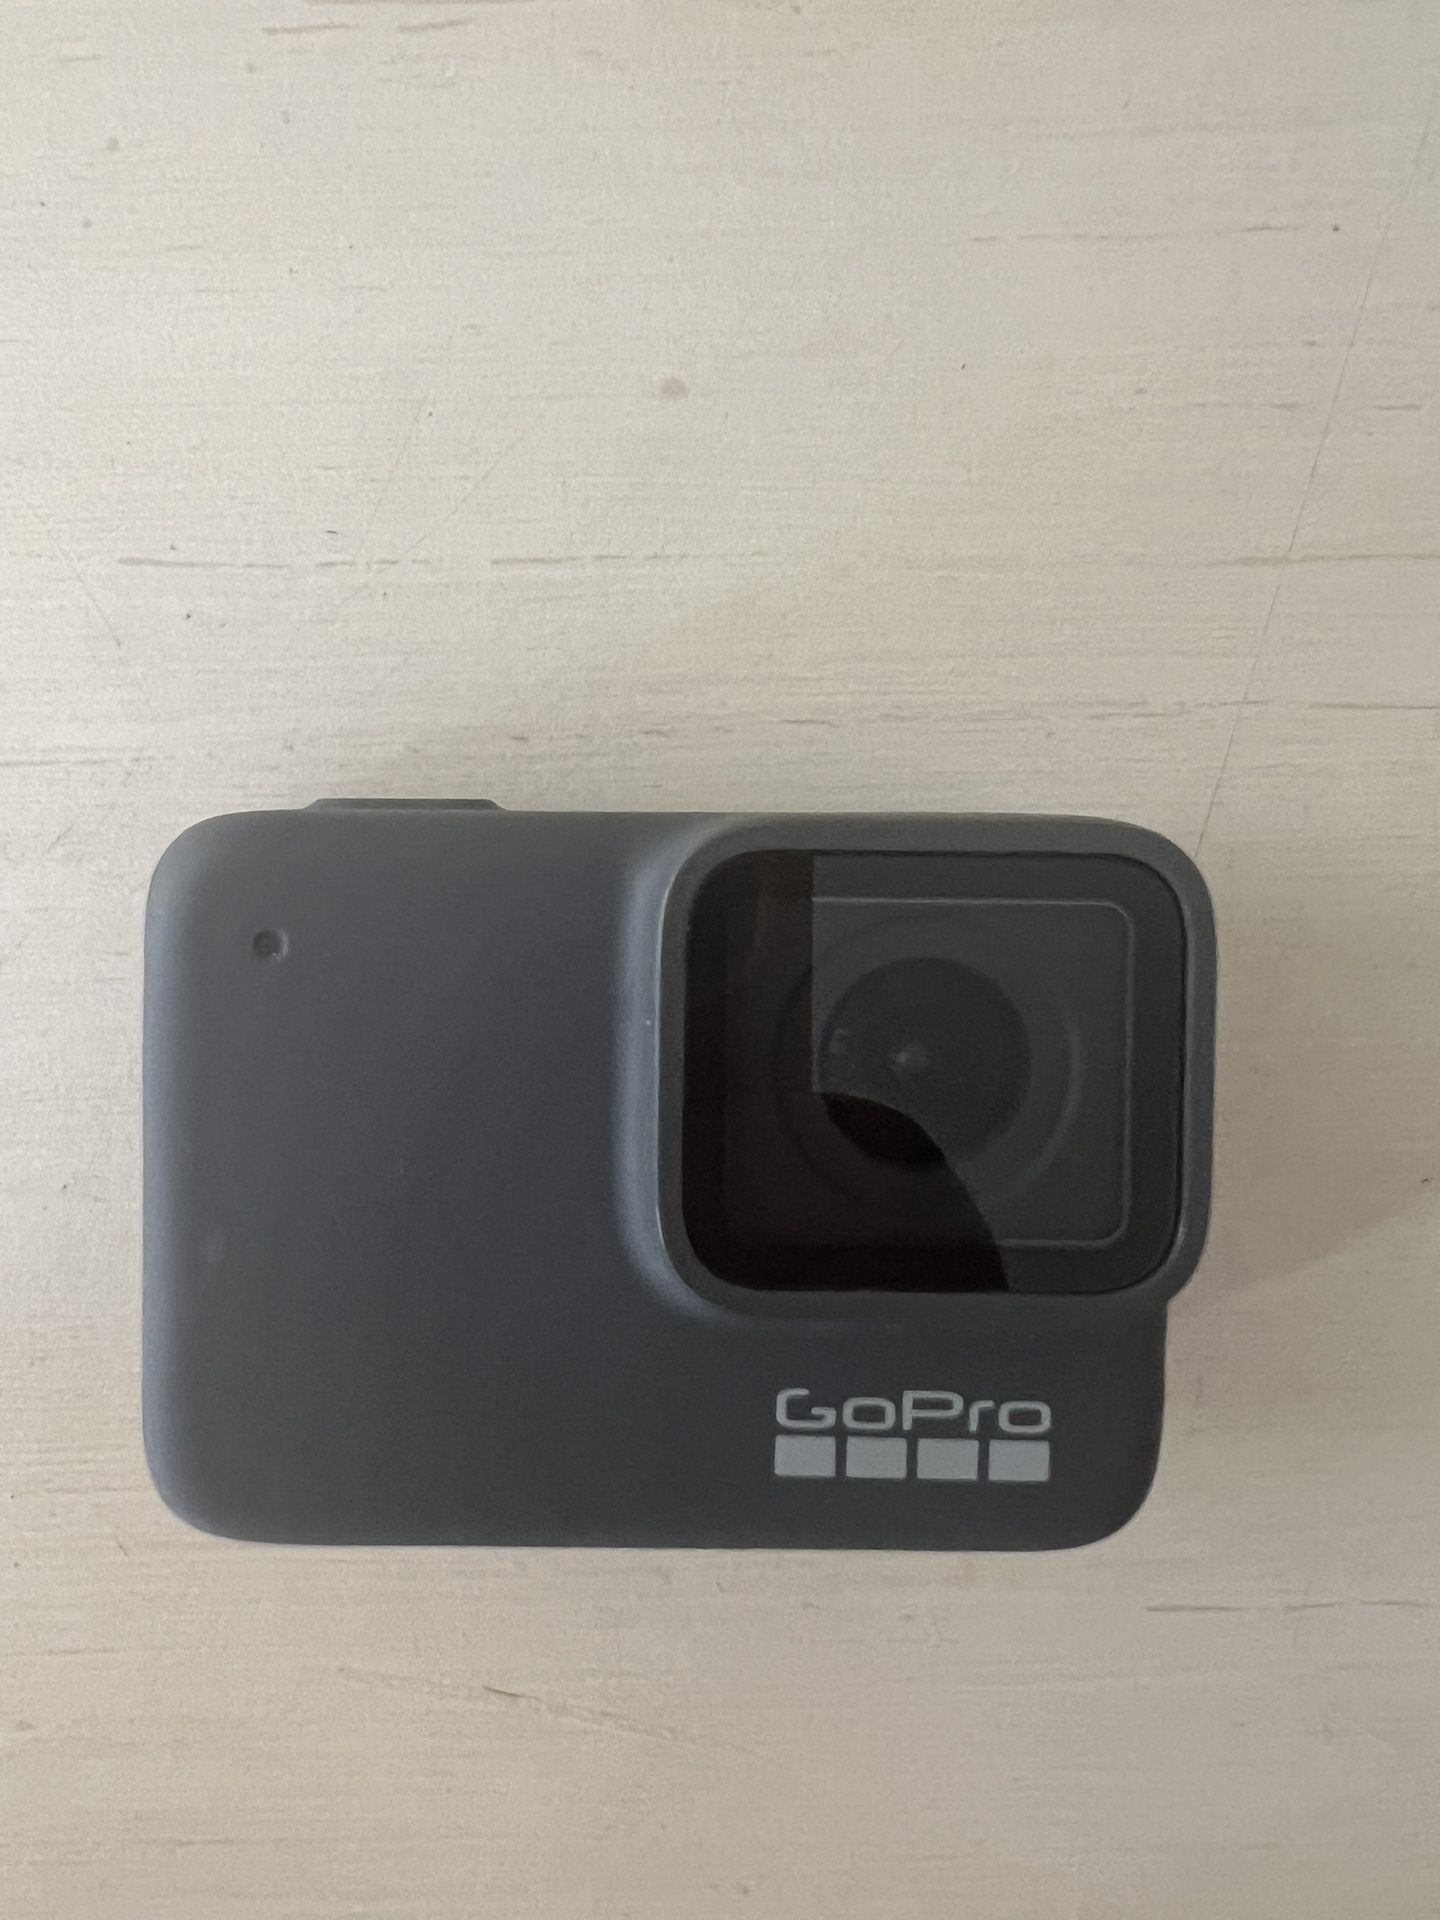 GoPro - HERO7 Silver 4K Waterproof Action Camera - SILVER